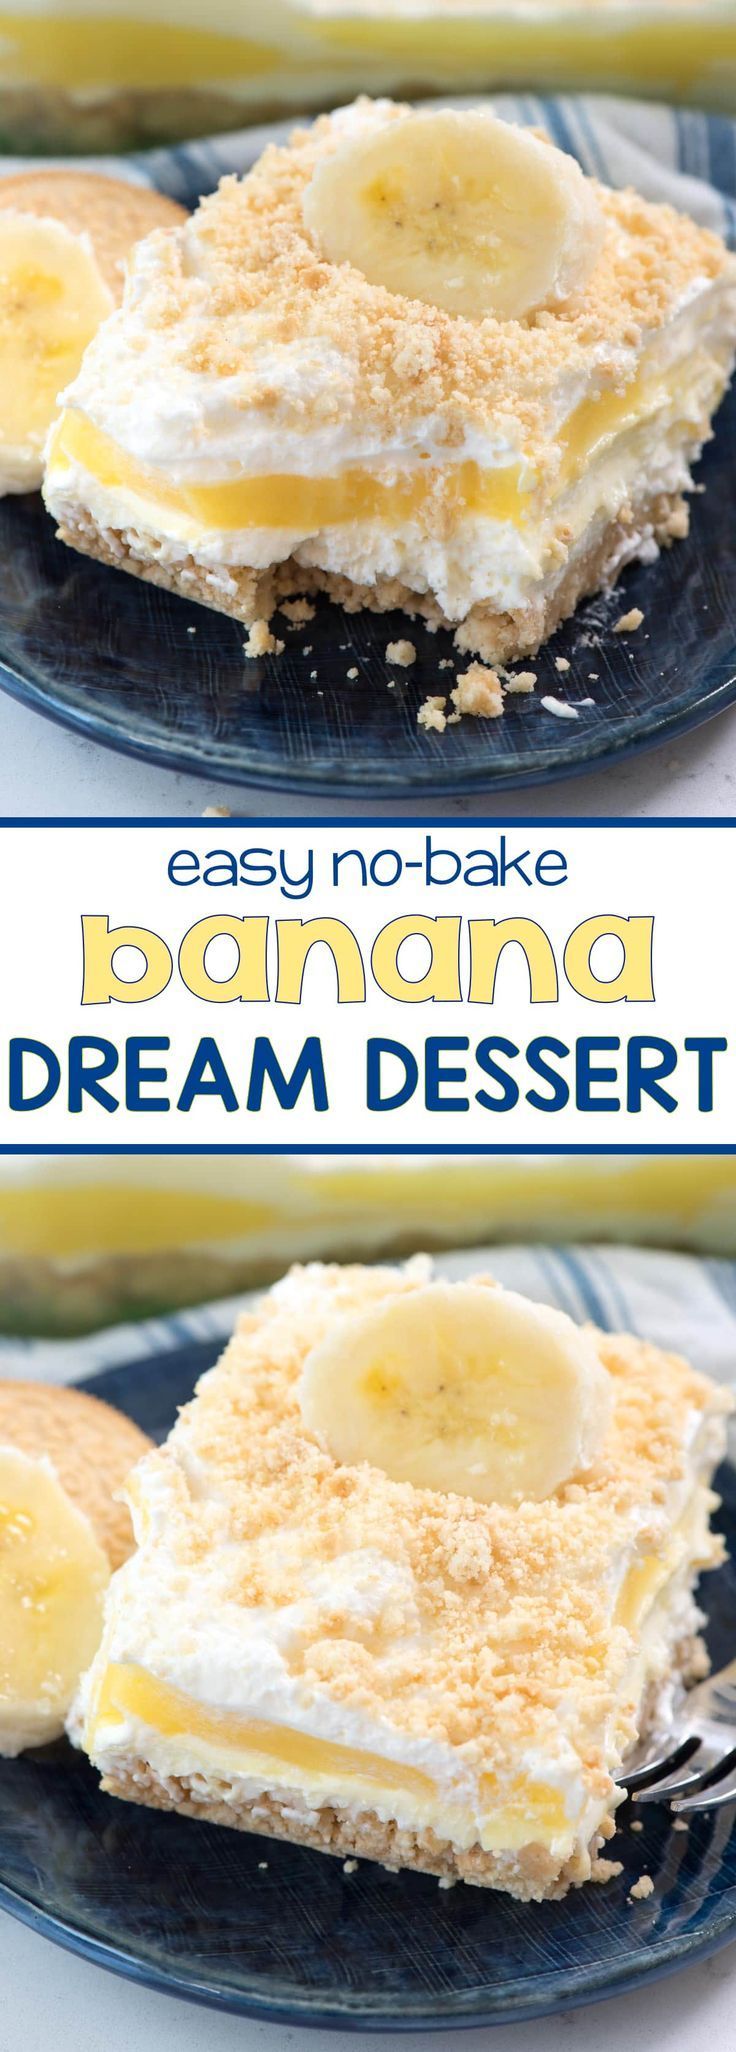 No Bake Banana Pudding Dream Dessert – this easy dessert lasagna recipe is made with BANANA pudding! Its layered with no bake